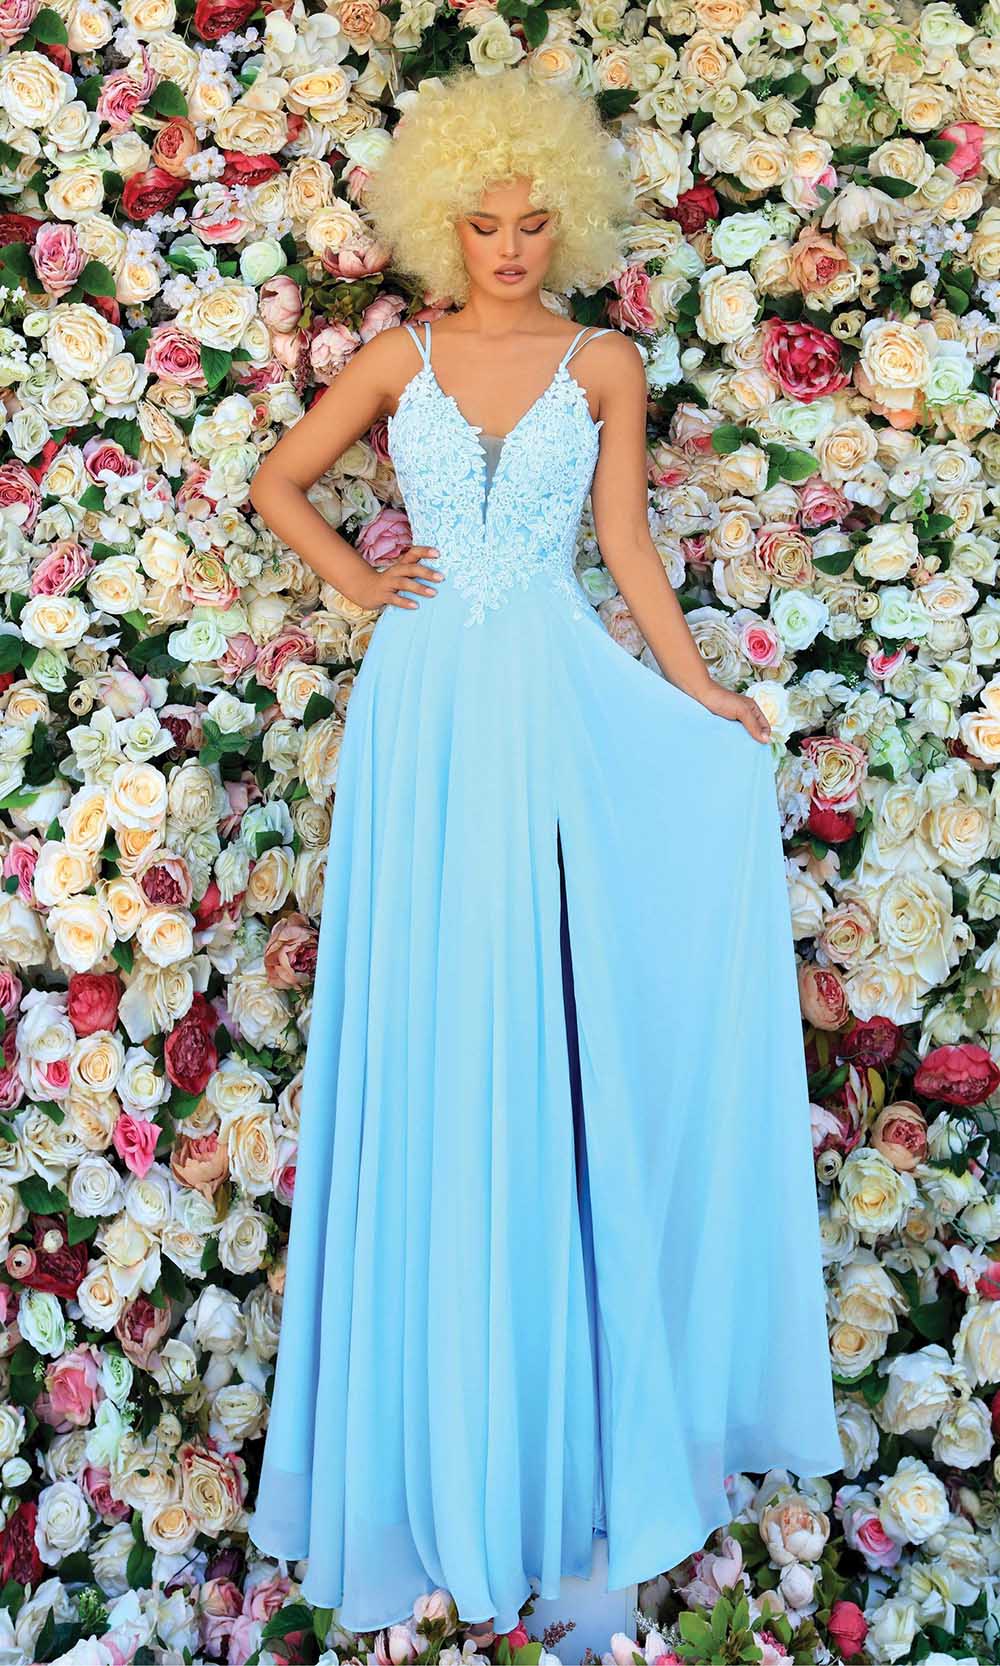 Clarisse - 810145 Lace Bodice Chiffon Gown Prom Dresses 2 / Light Blue